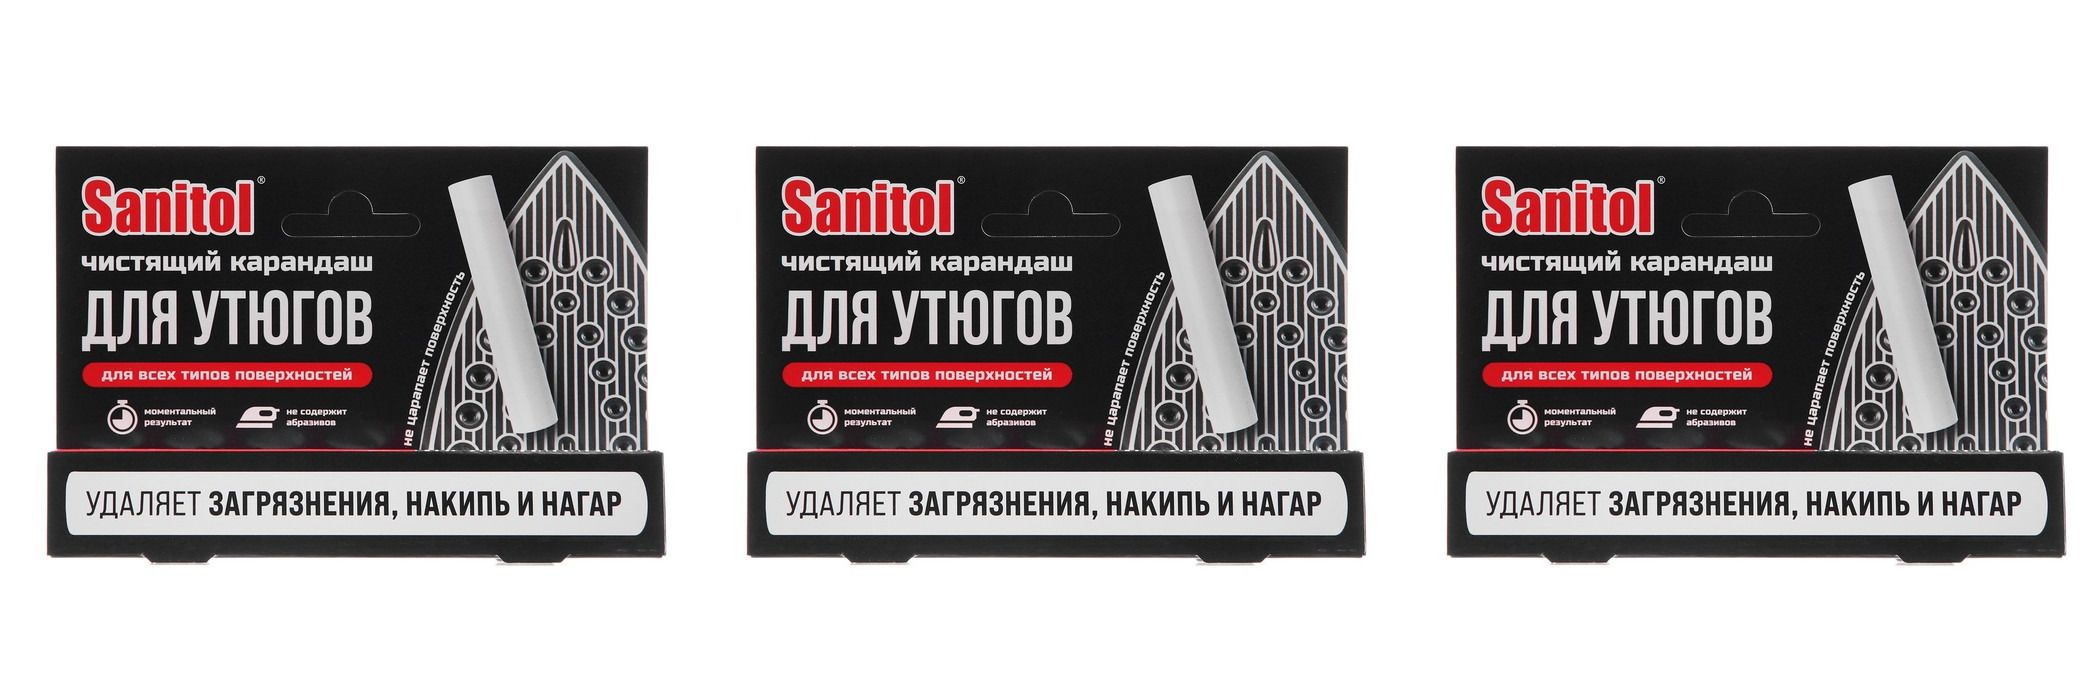 Чистящий карандаш для утюгов Sanitol 3шт чистящий карандаш для утюгов sanitol 6шт